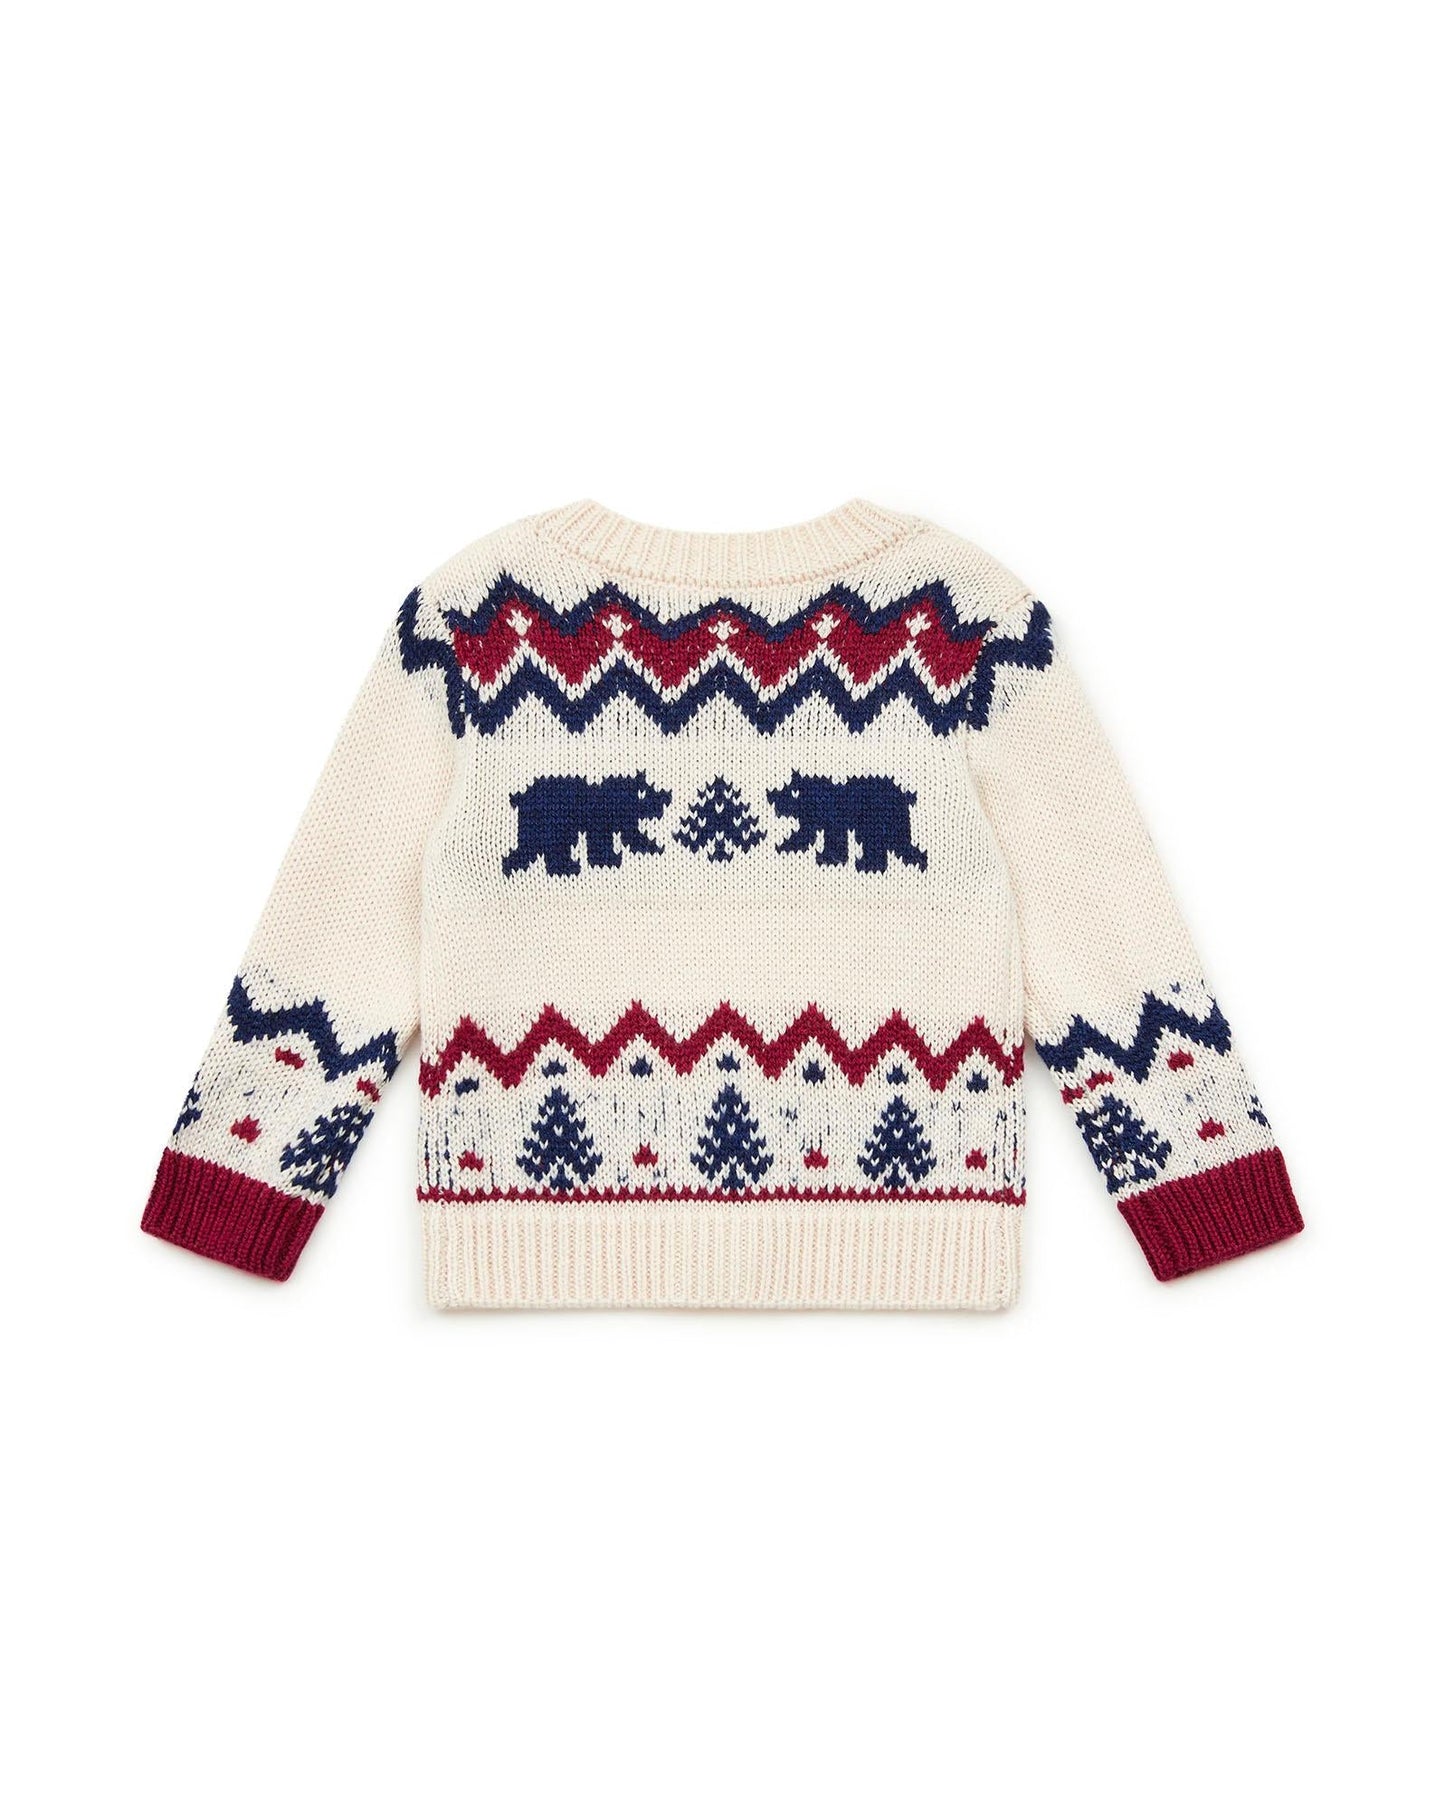 Cardigan Bear Beige Baby knitted